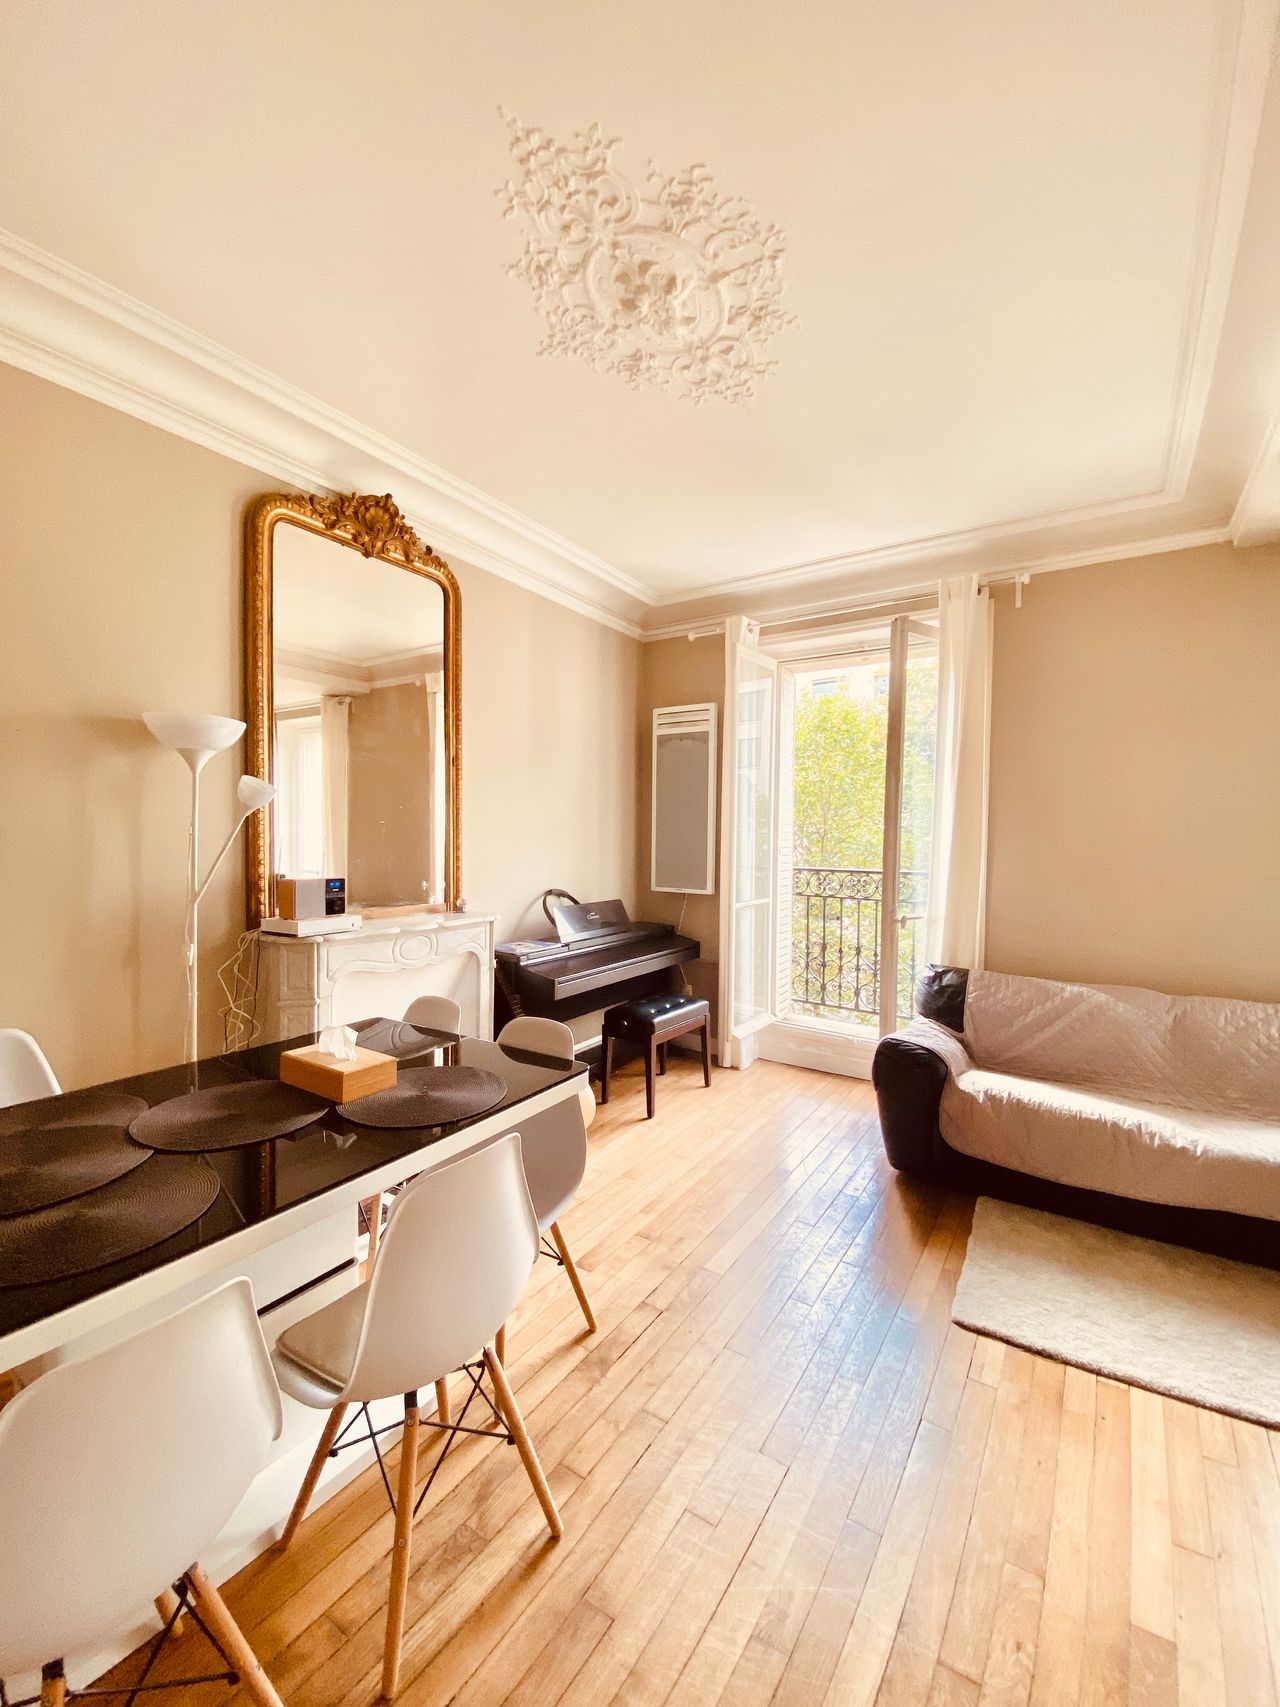 Rent apartment in Paris during Olympic Games 2024